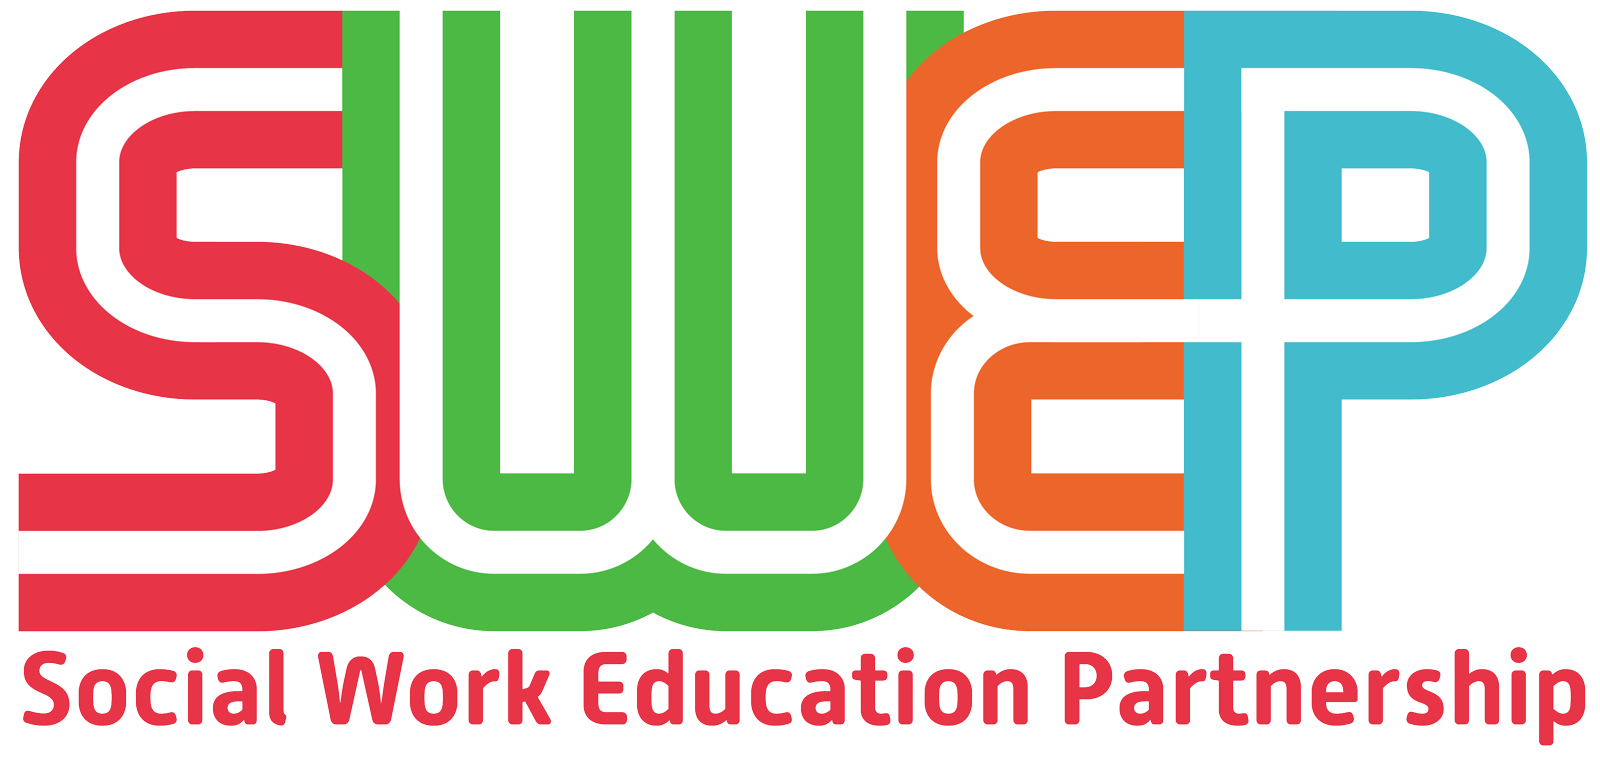 Social Work Education Partnership logo